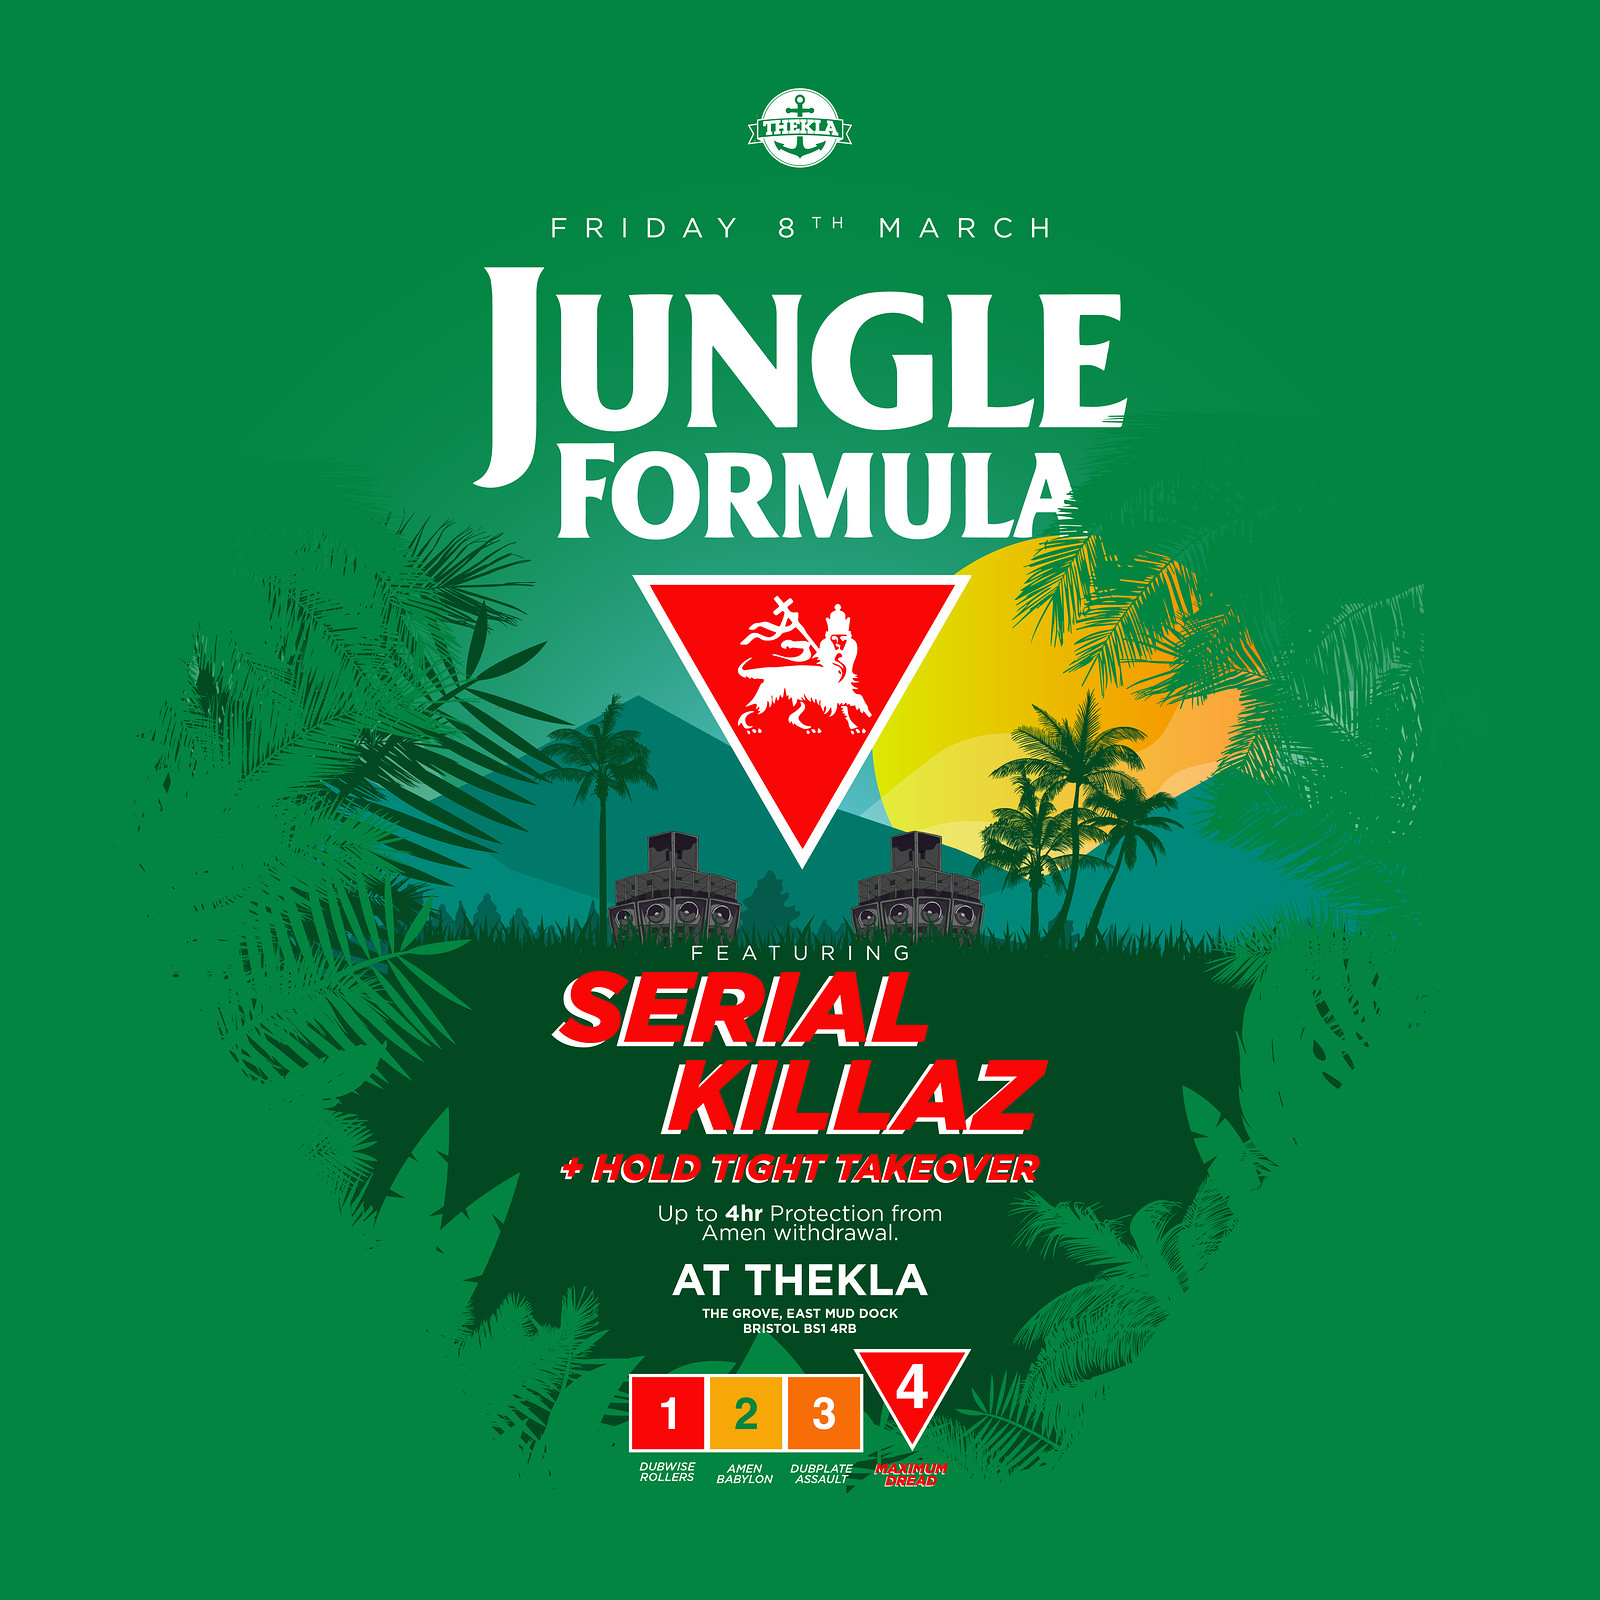 Jungle Formula // Serial Killaz & Hold Tight at Thekla